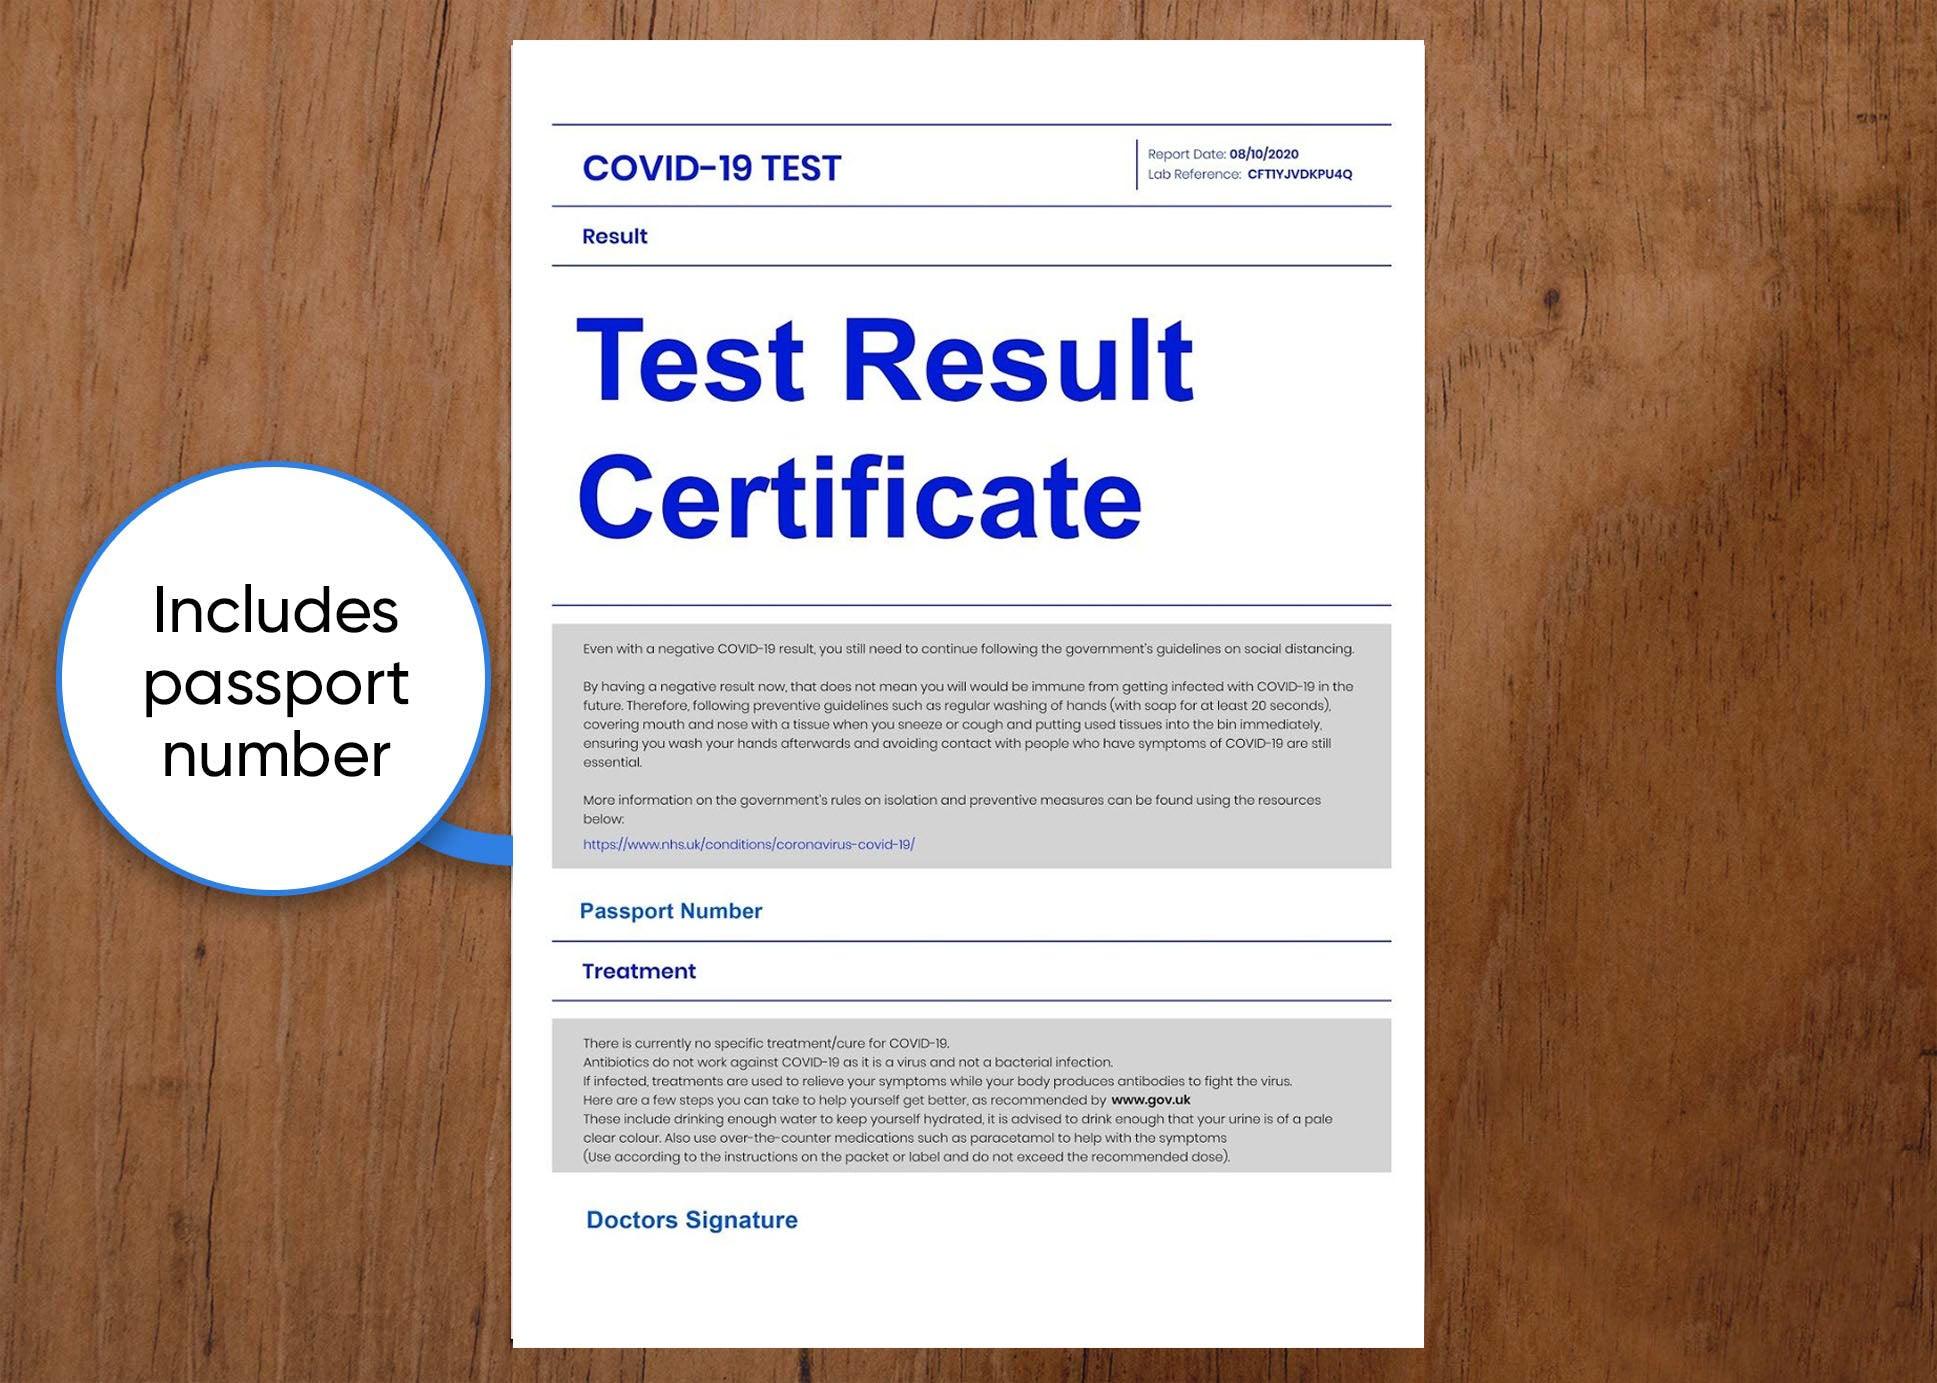 PRE-DEPARTURE COVID TEST - ANTIGEN TEST & CERTIFICATE FOR RETURN TO THE UK